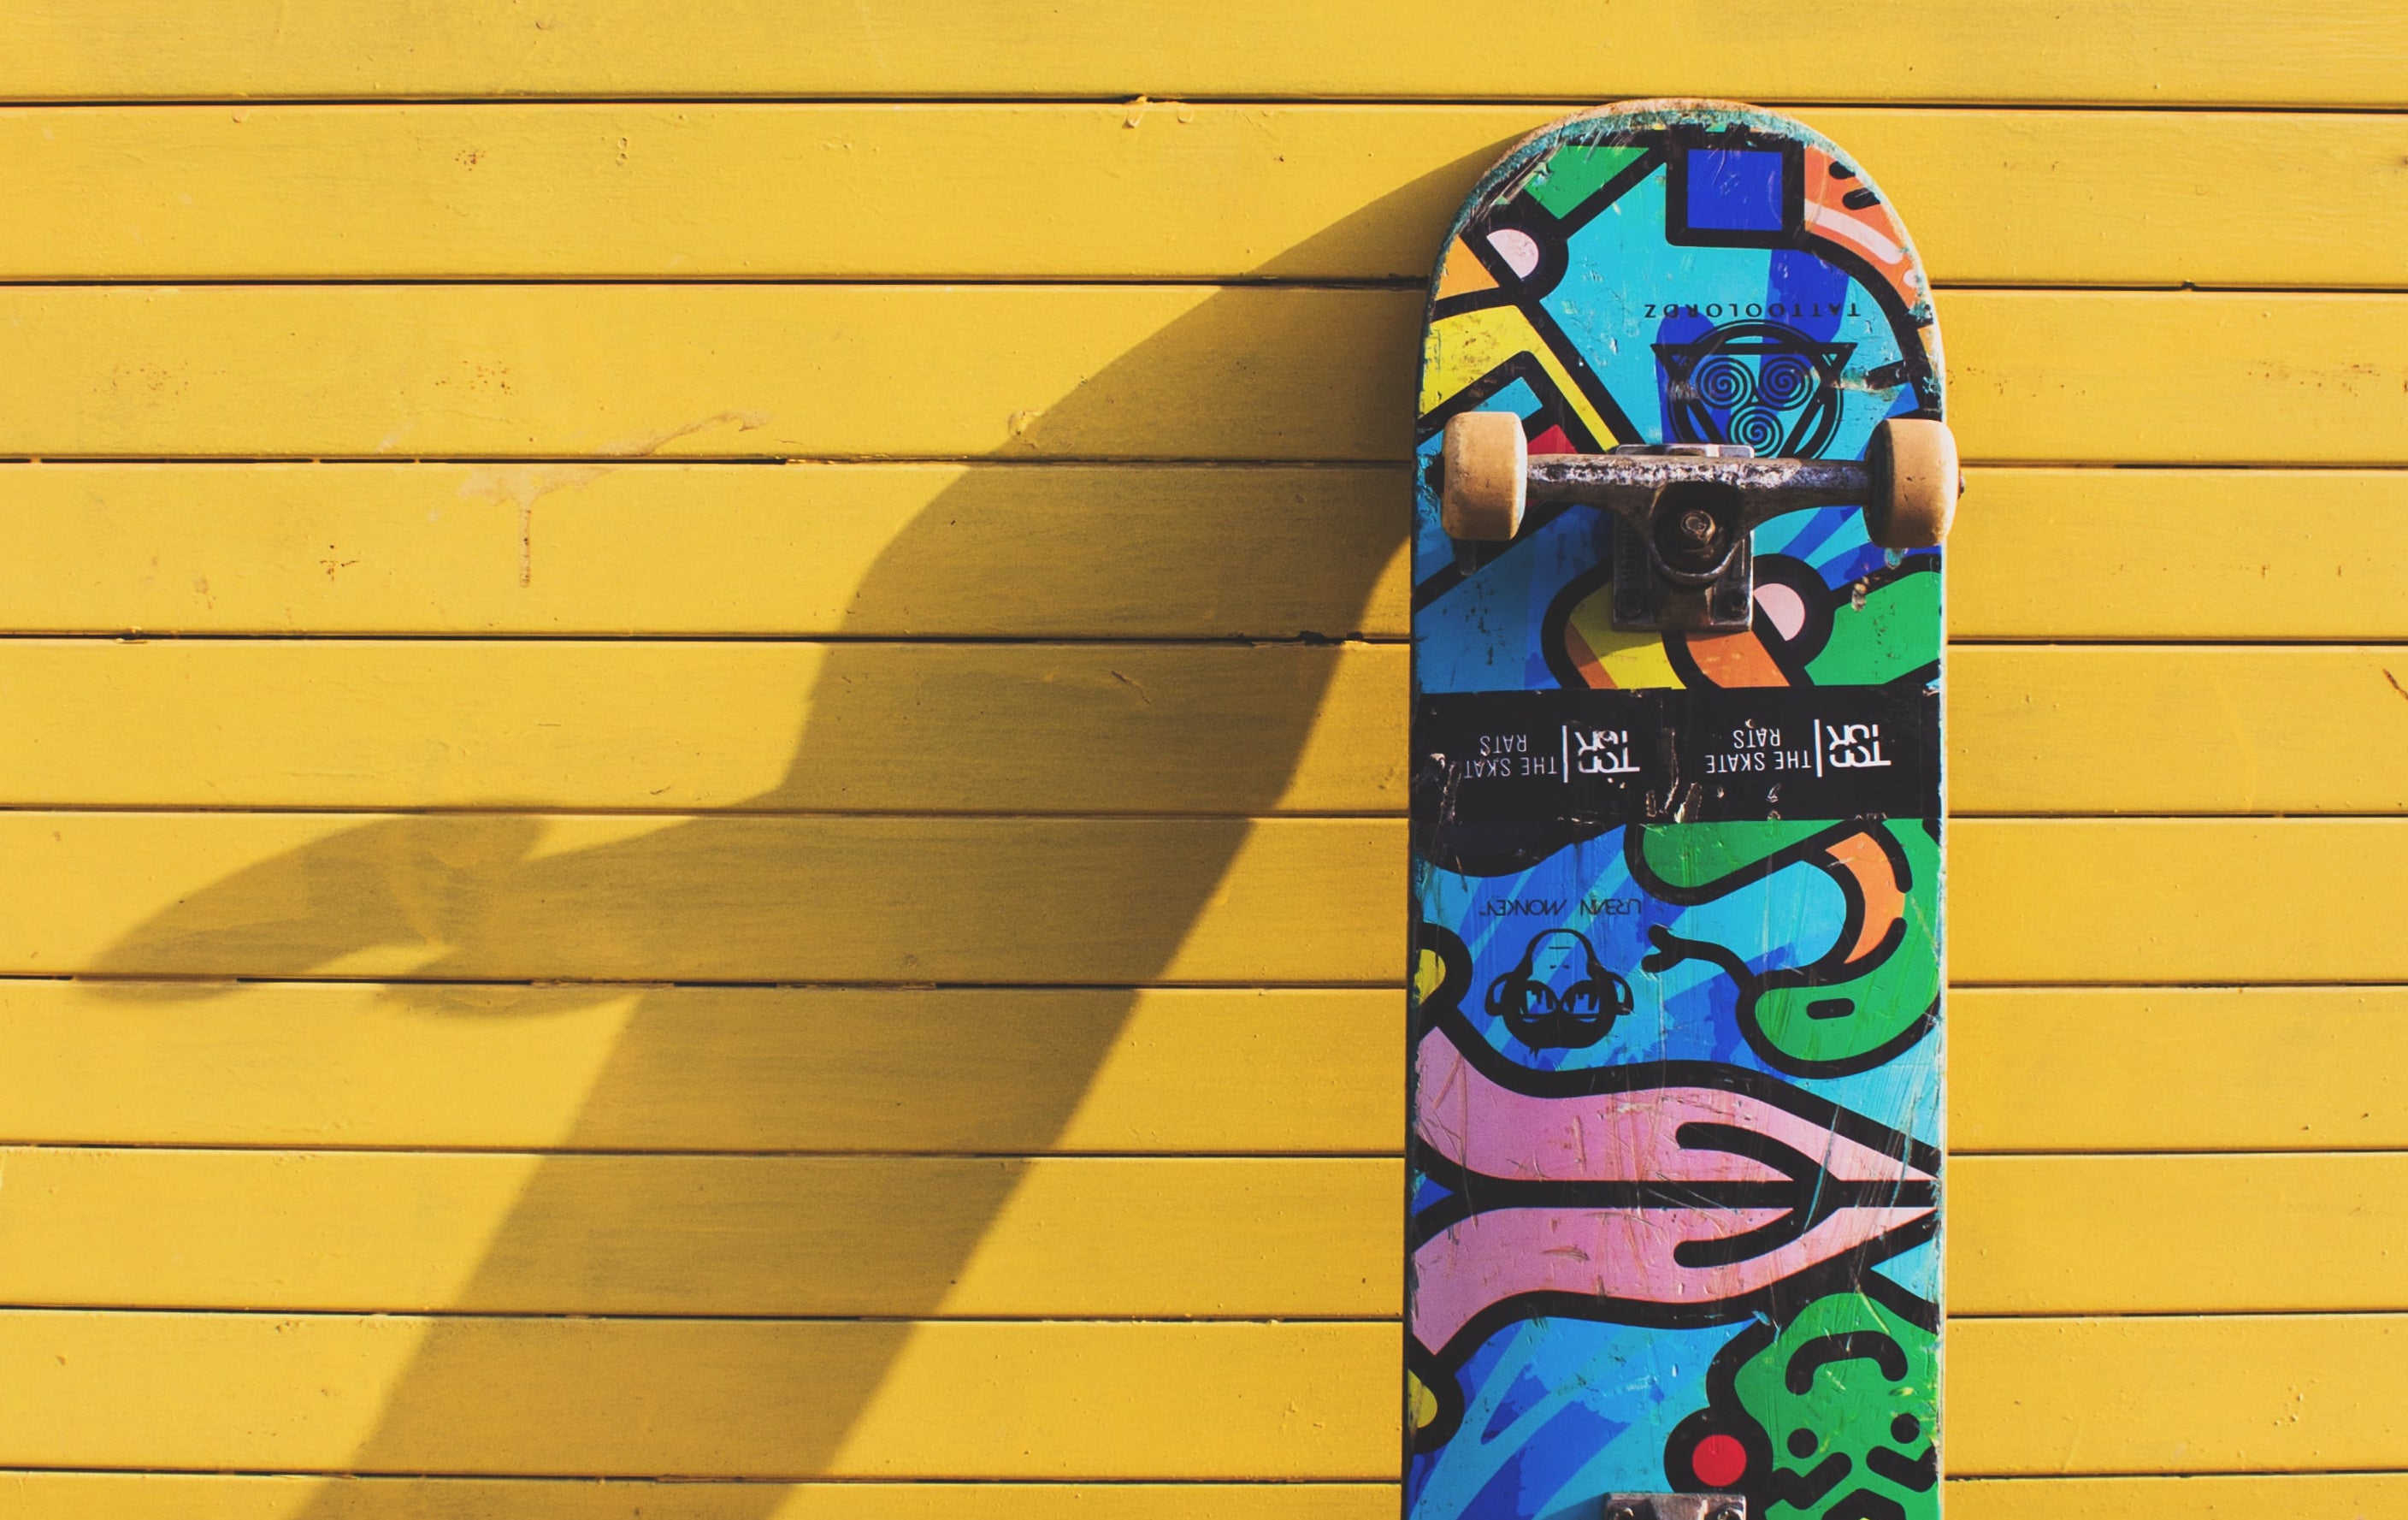 A hemp skateboard leaning against a wall